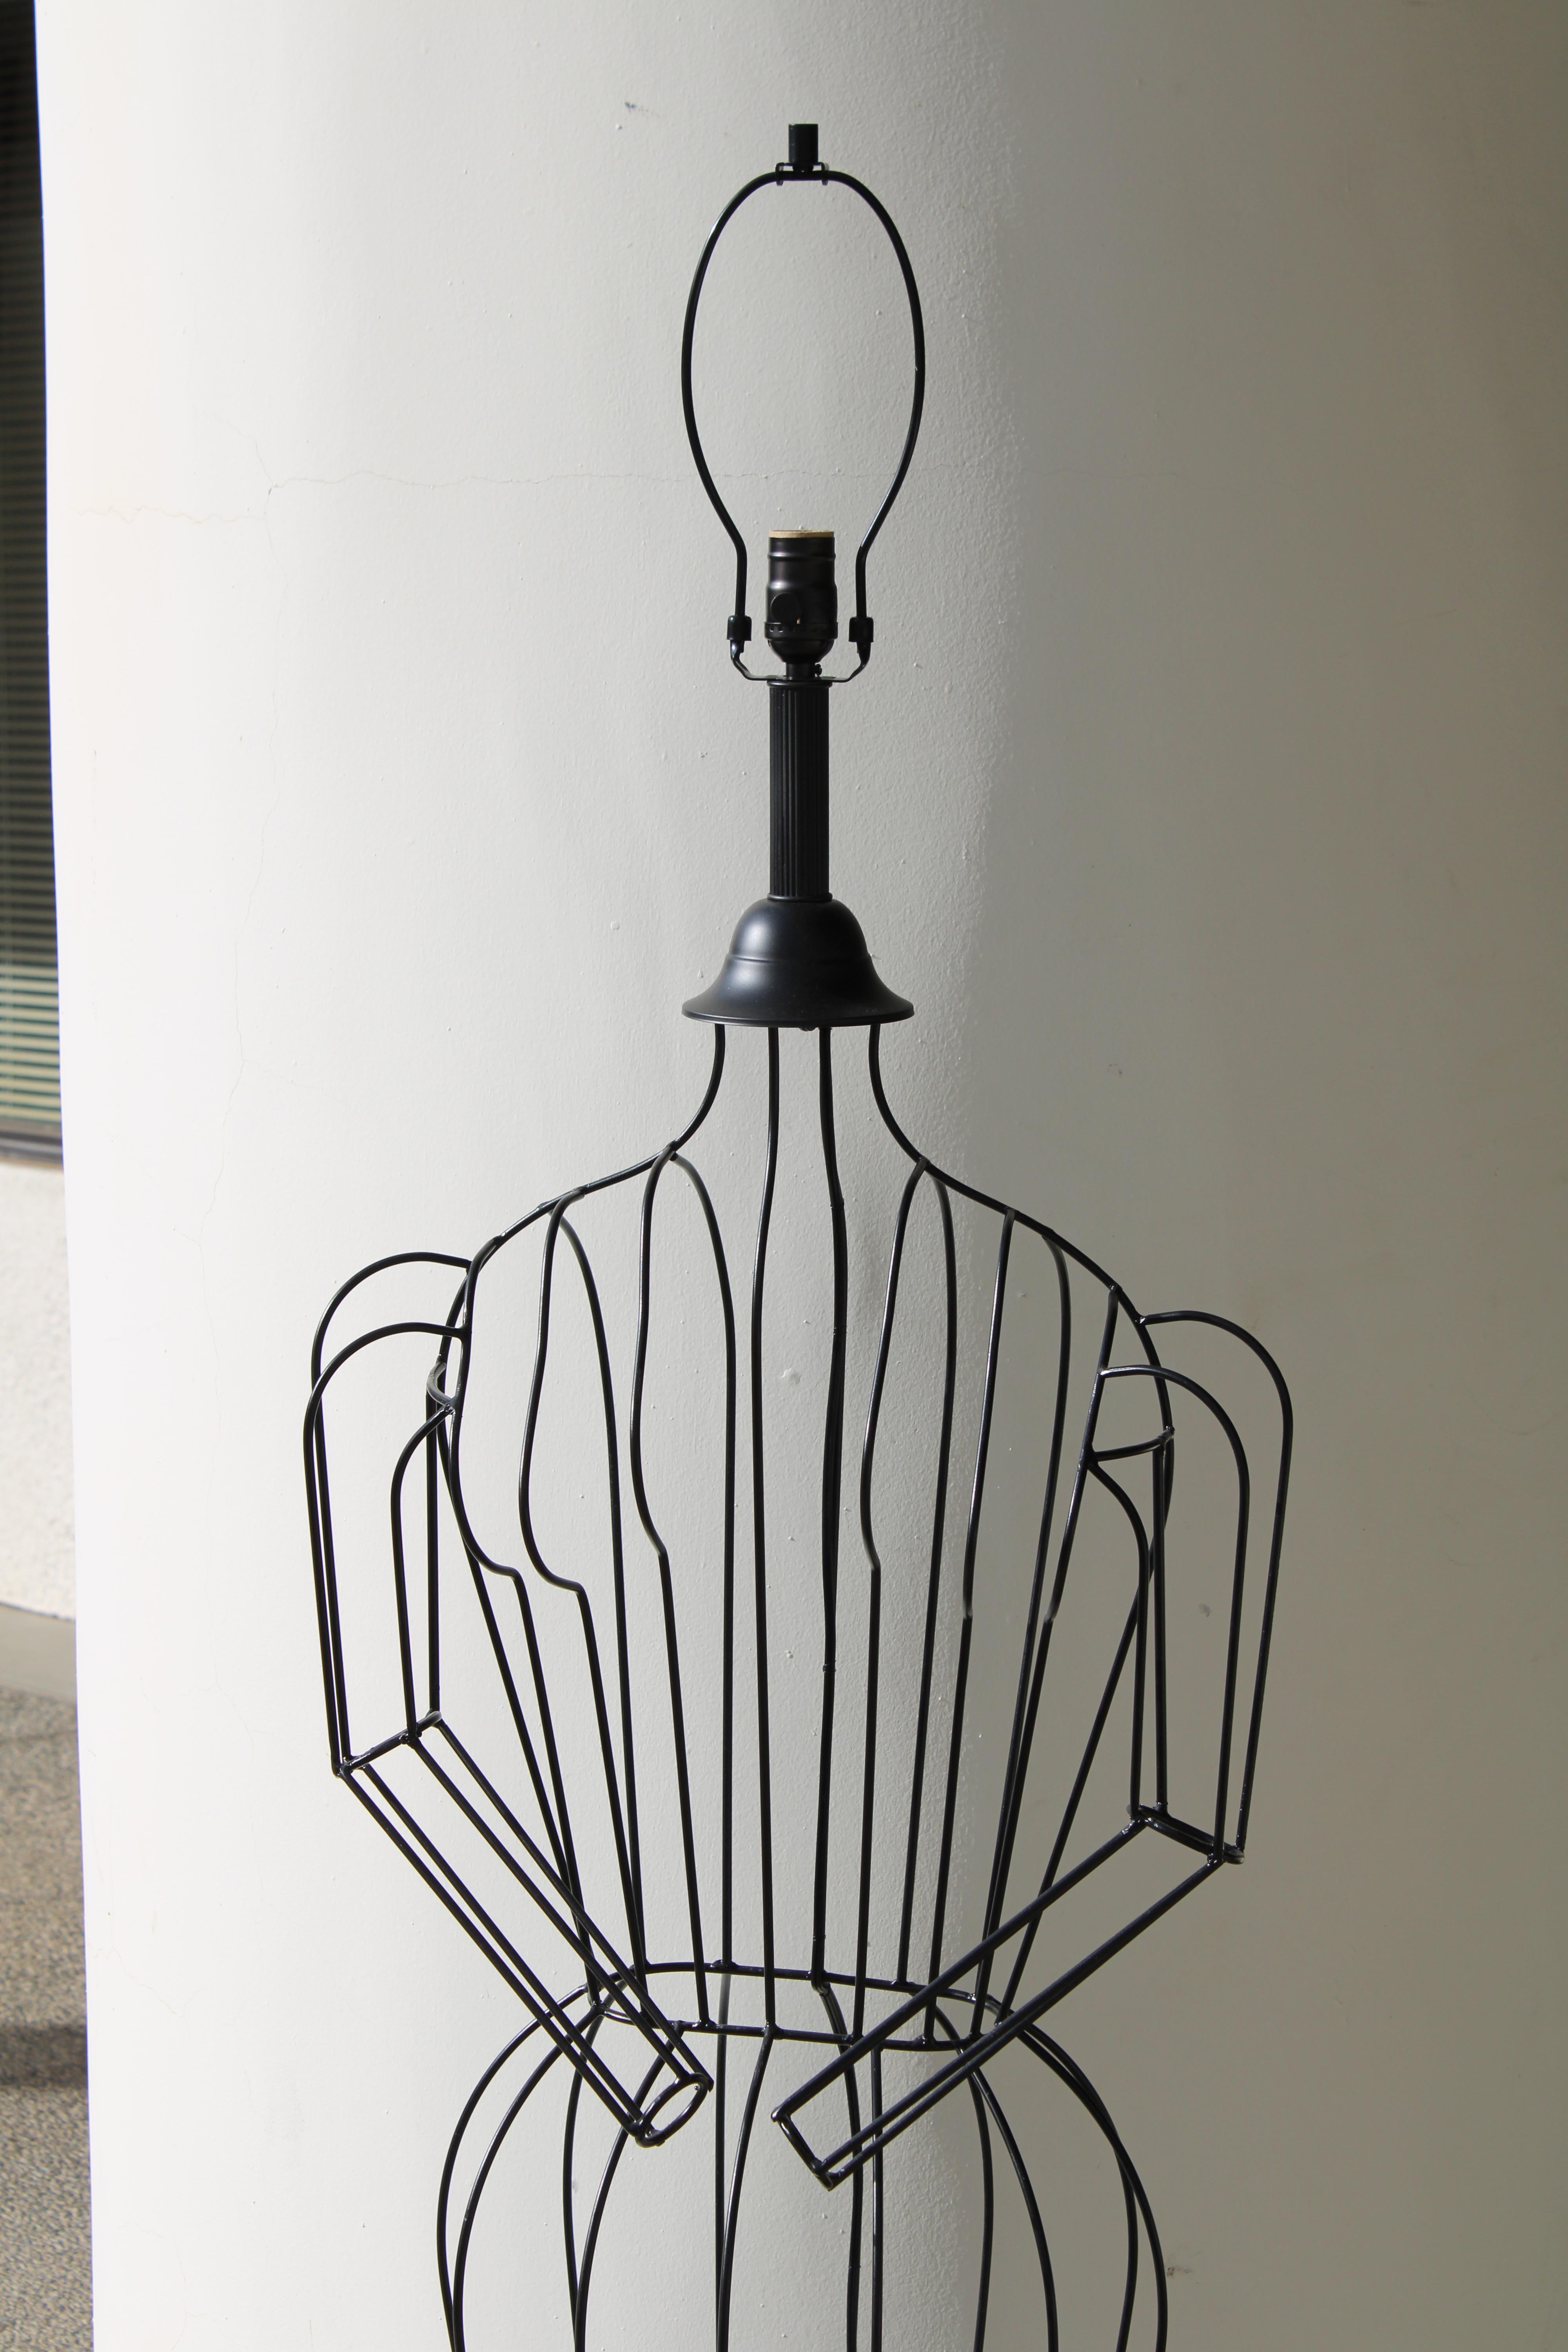 Women's dress form figural floor lamp. Lamp measures 19.5